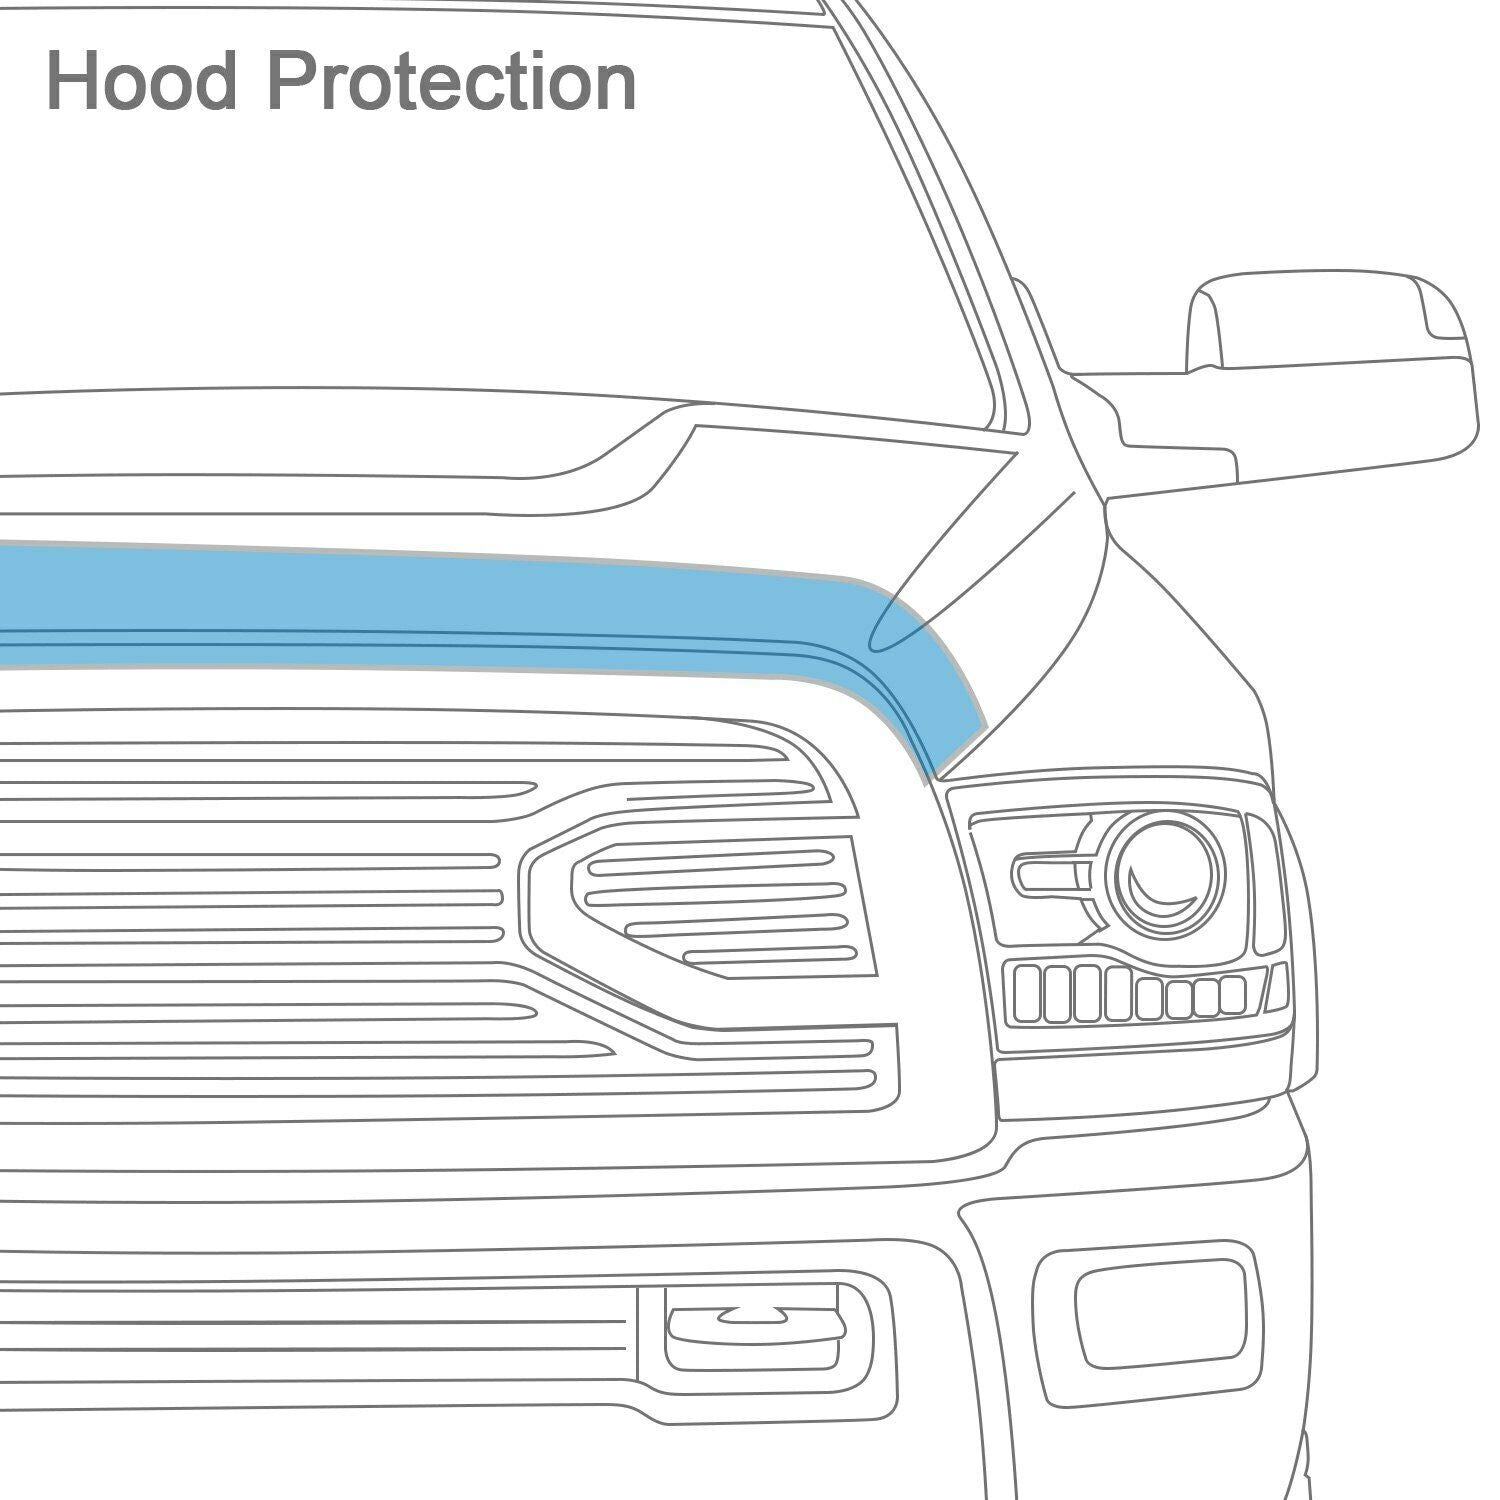 AVS Aeroskin Dark Smoke Hood Protector Bug Shield For 2012 Honda Civic - 320028